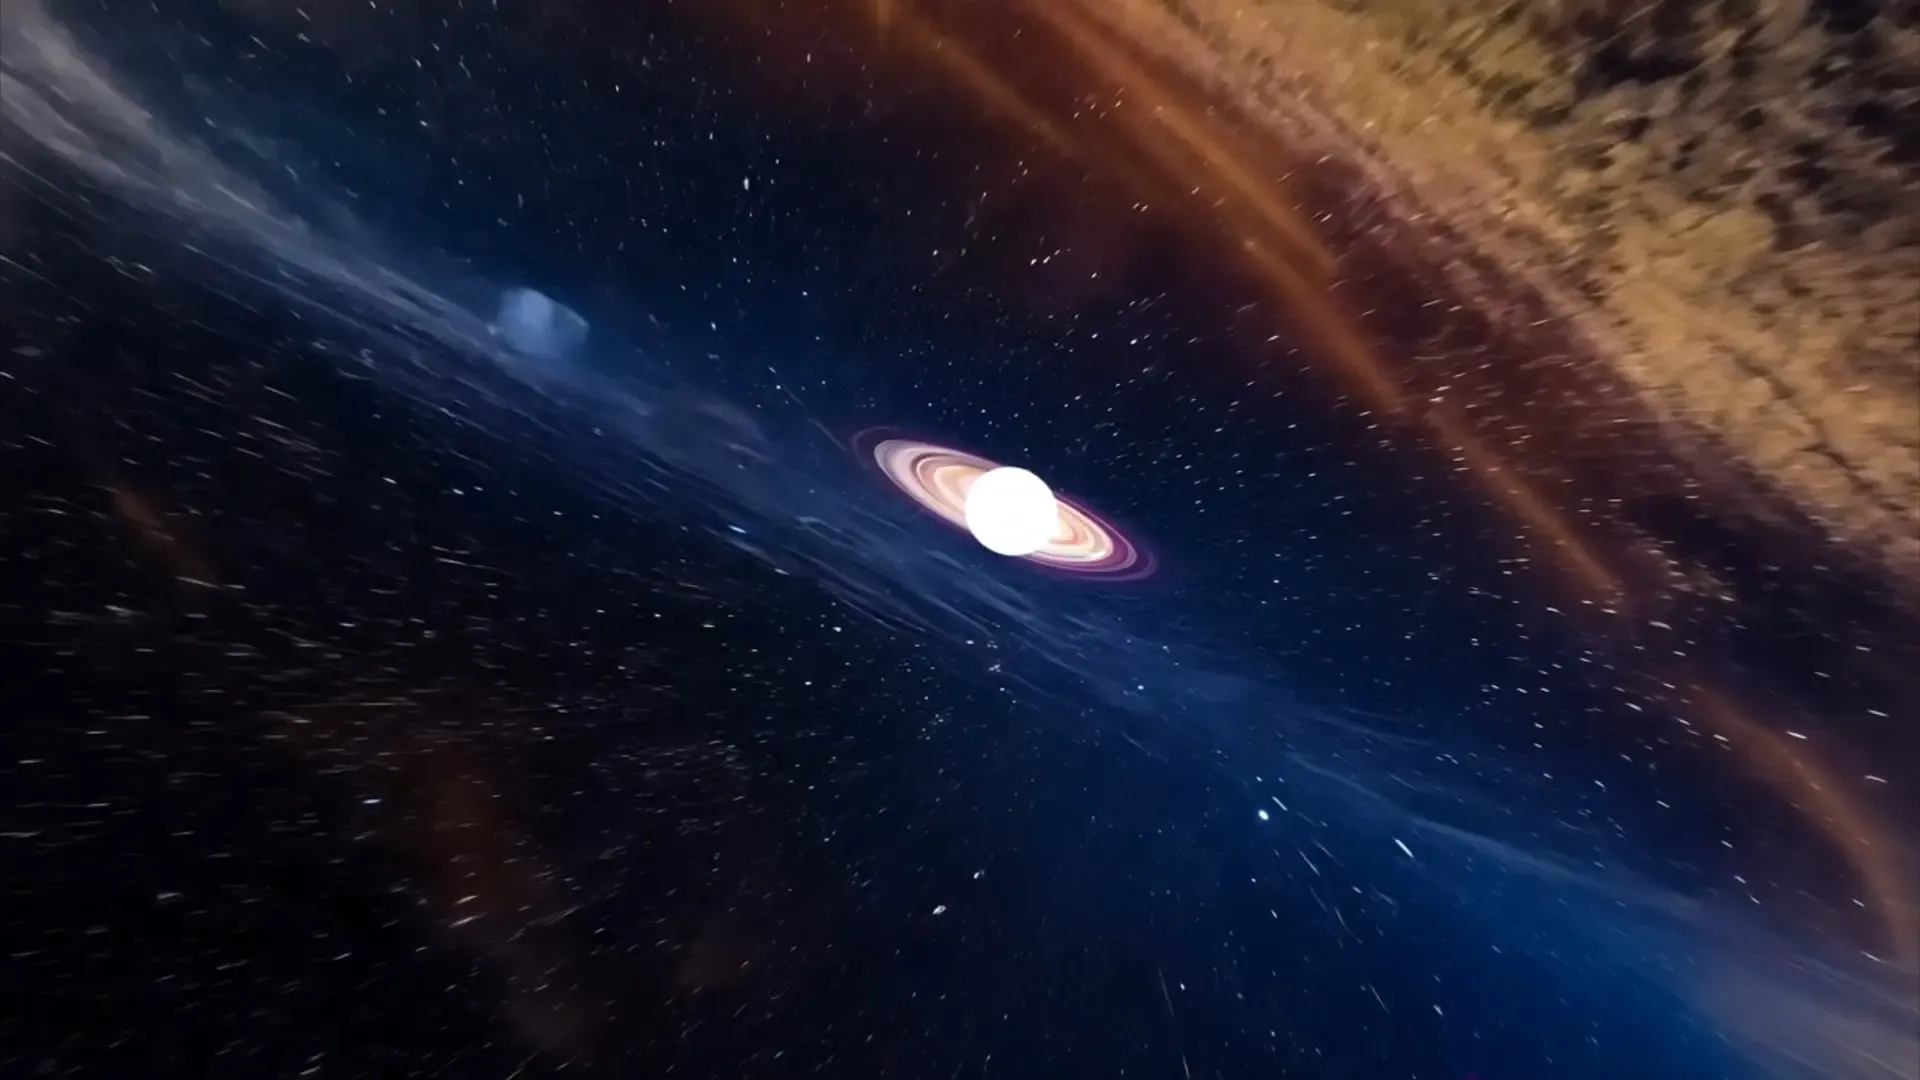 Stellar Spiral Galaxy Transition for Futuristic Videos